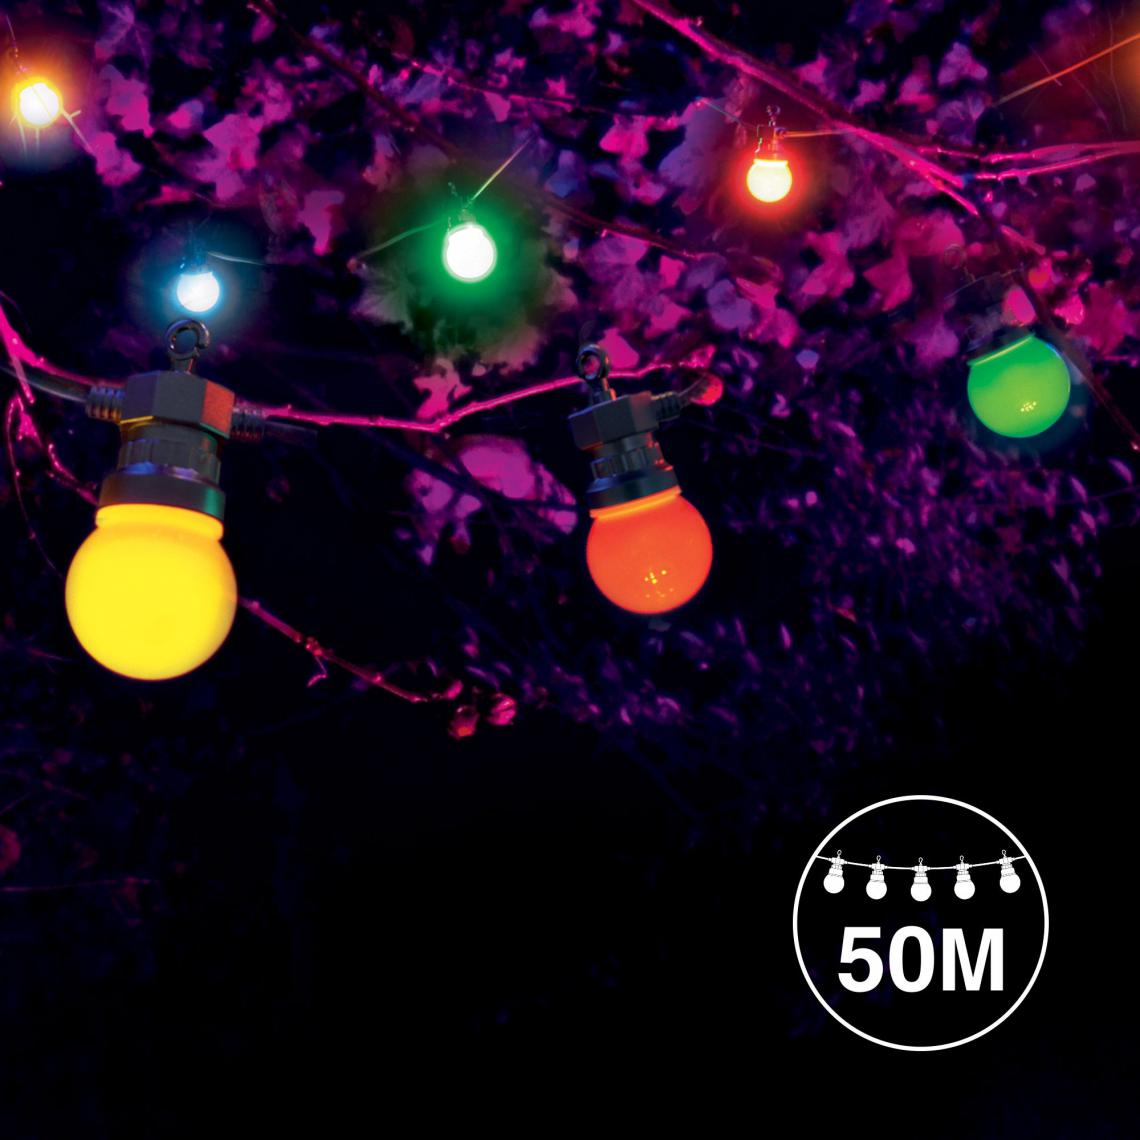 Skylantern - Kit Guirlande Guinguette 50m Multicolore Raccordable en Série Guirlande Lumineuse 50 Rouge Jaune Vert Bleu Extérieur Terrasse Jardin - Lampadaire